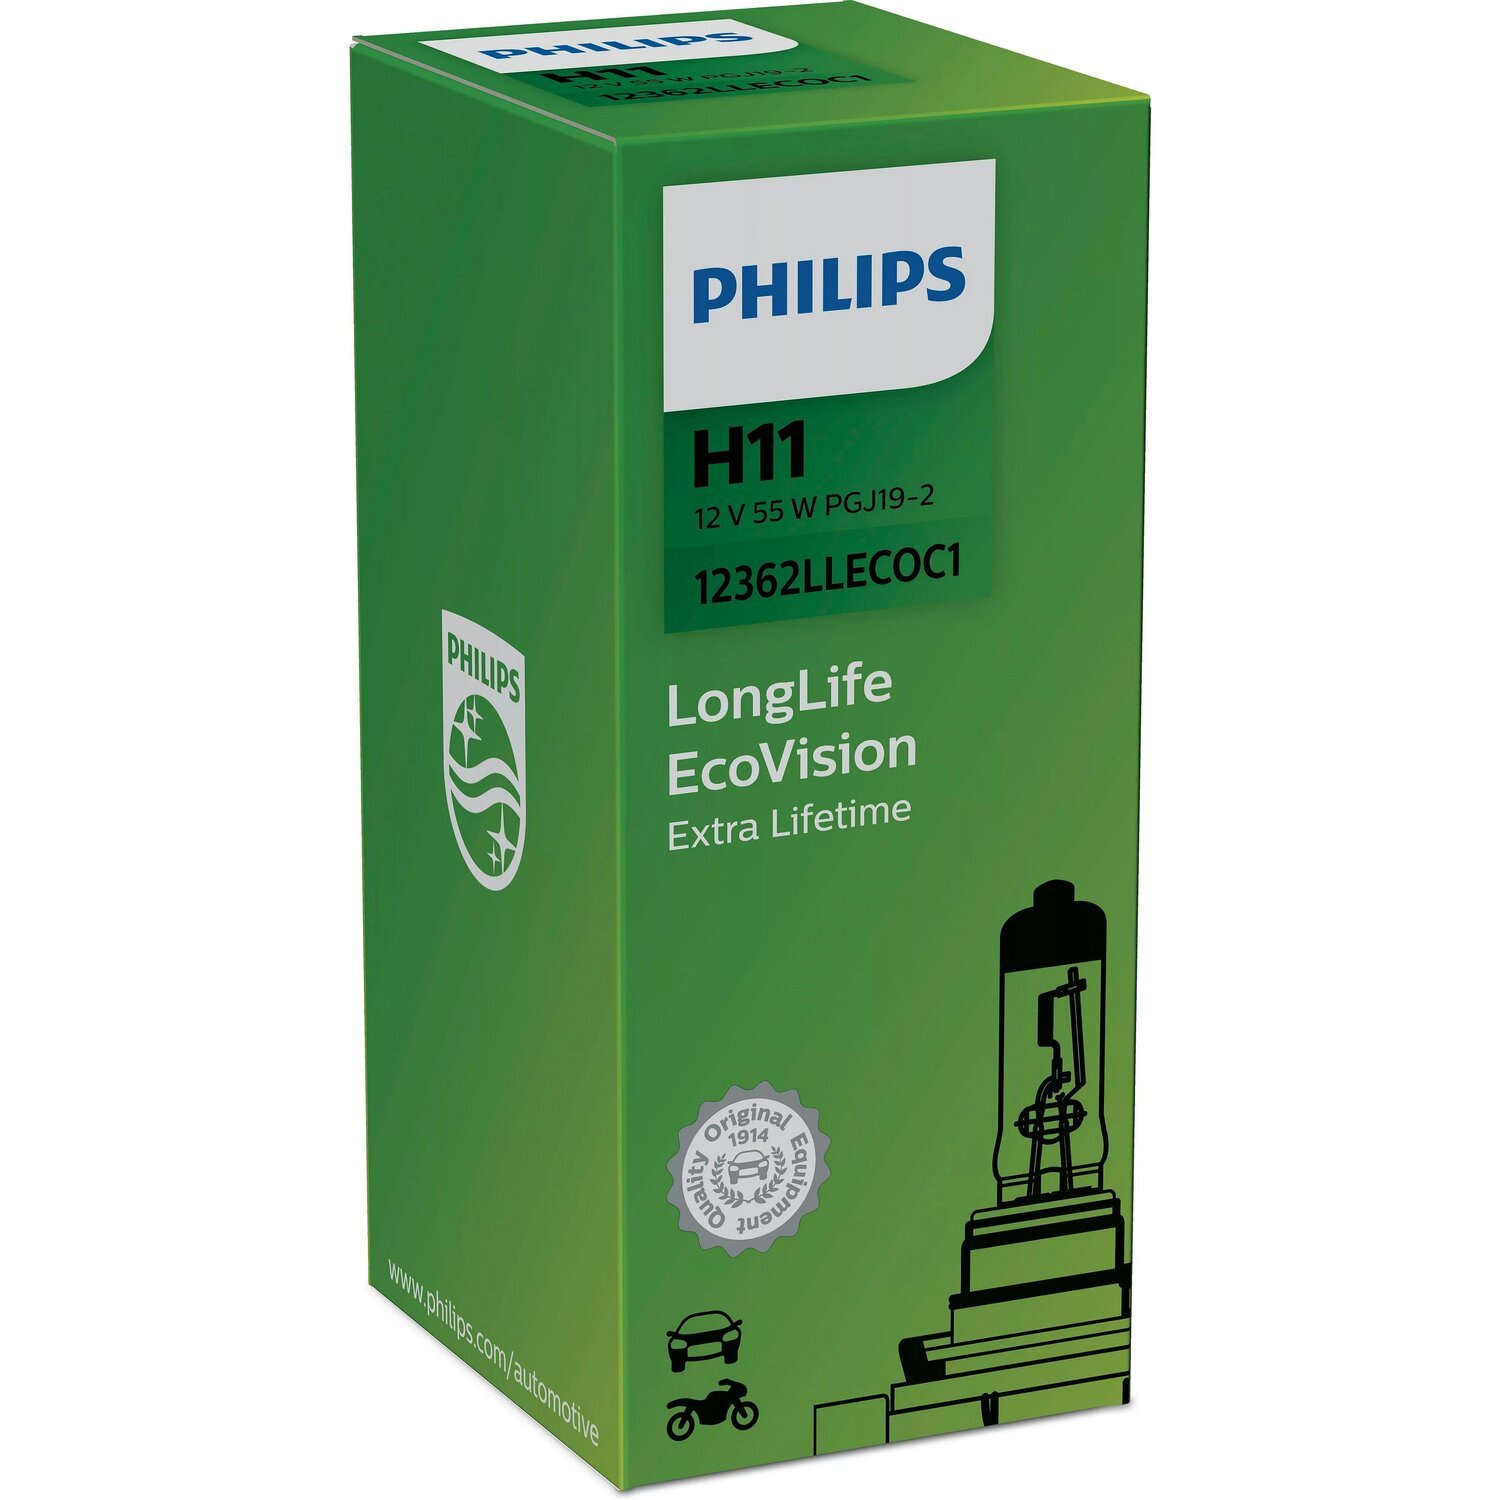 Лампа Philips галогеновая 12V H11 55W Pgj19-2 Longlife Ecovision (PS_12362_LLECO_C1) фото 